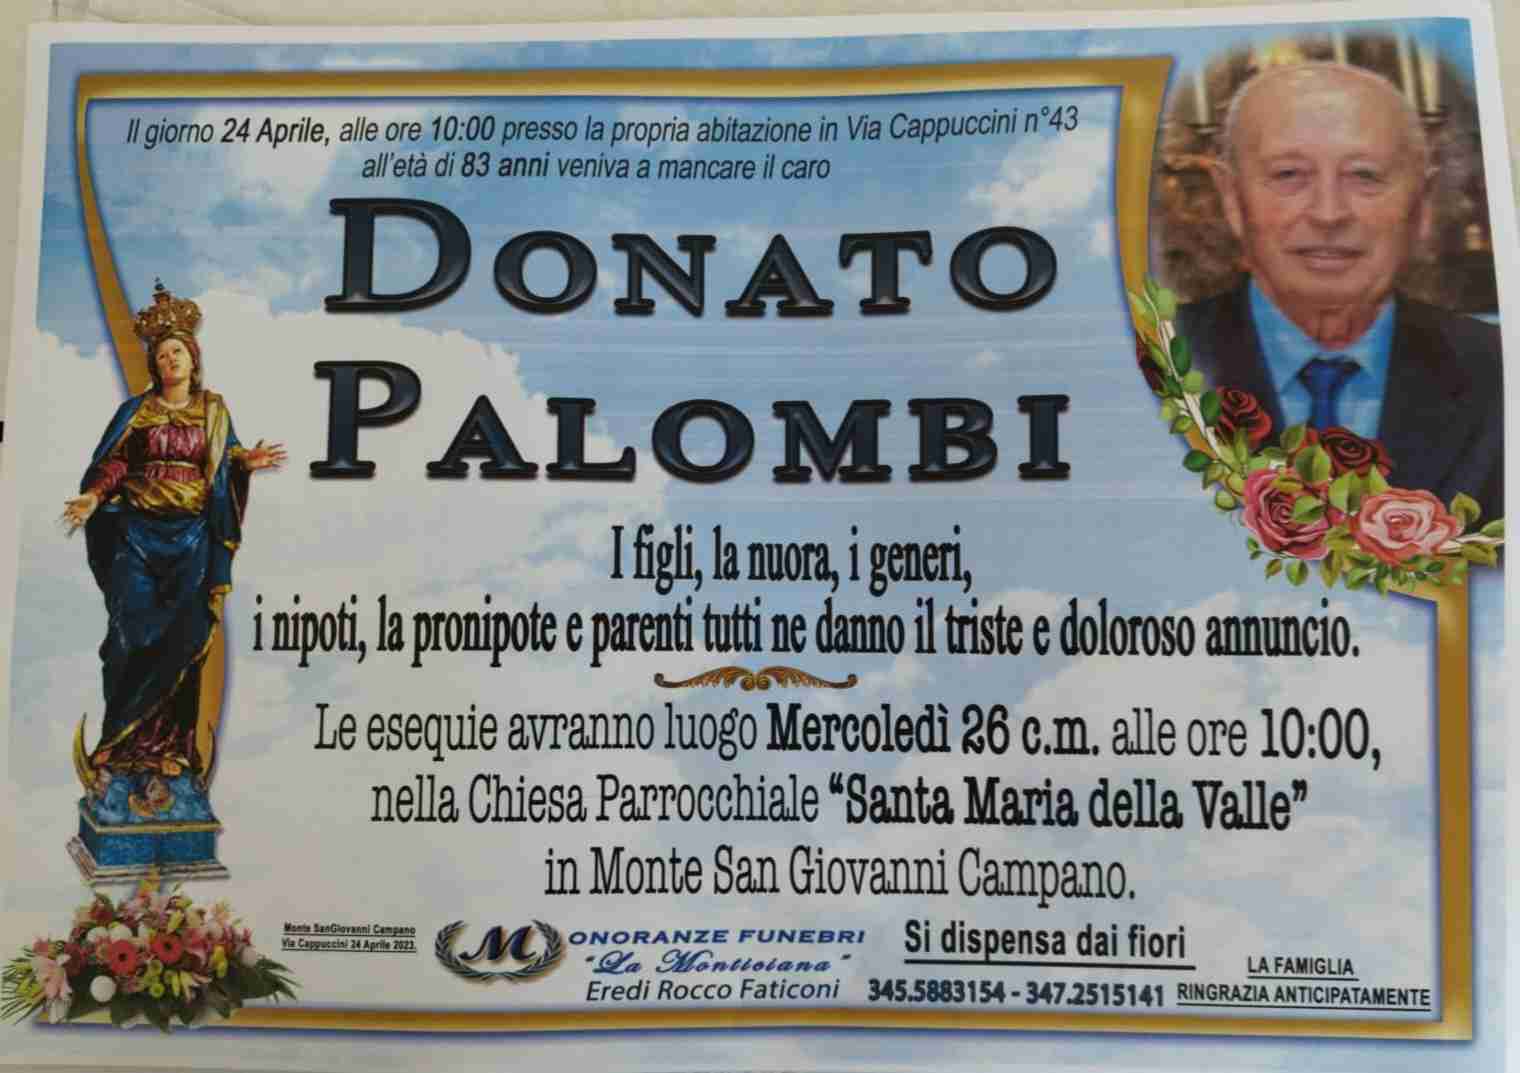 Donato Palombi